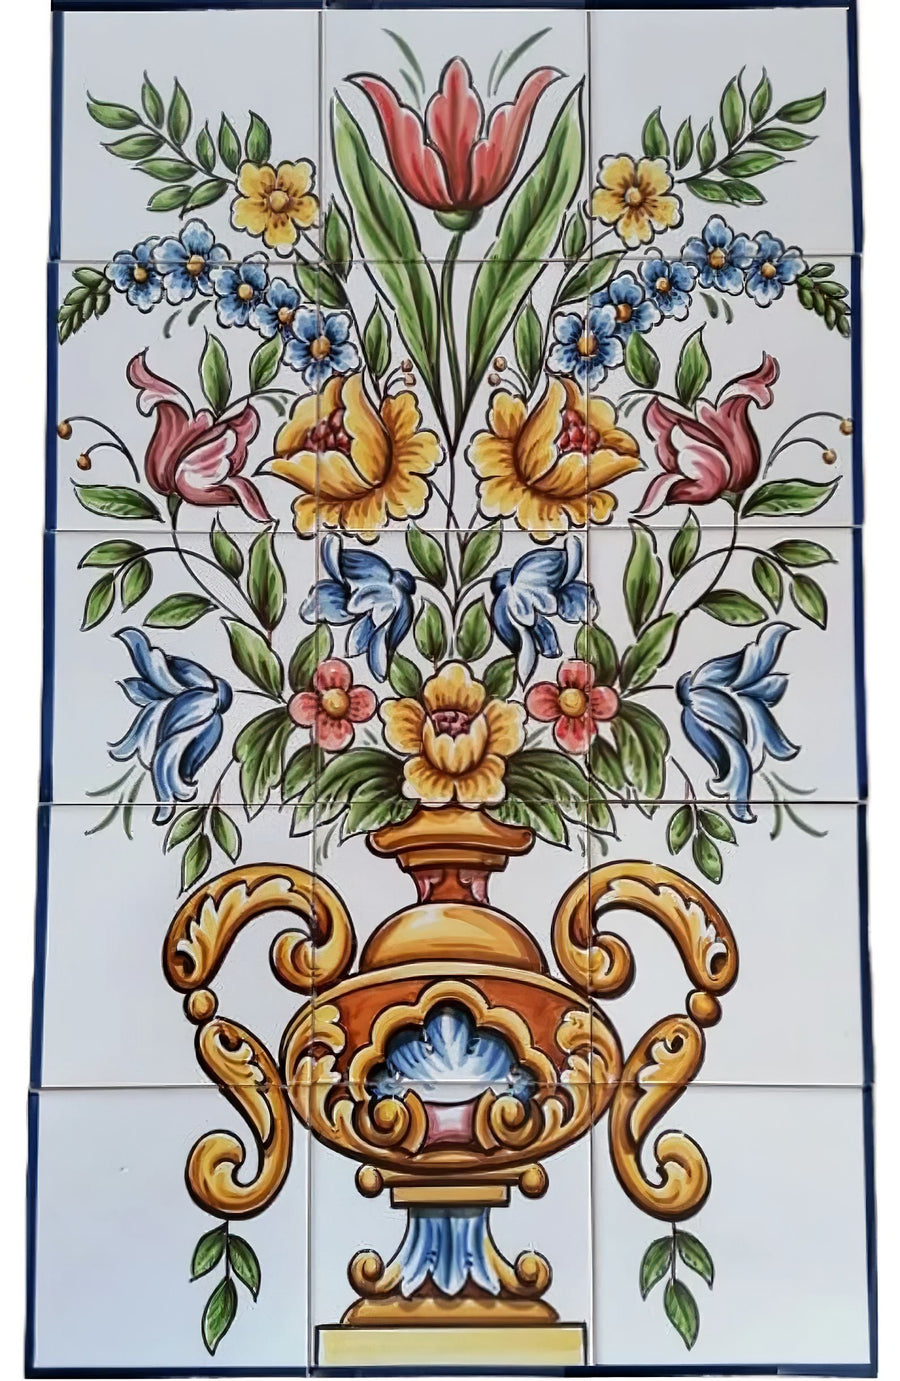 Colourful Flower Vase Tile Mural - Hand Painted Portuguese Tiles | Ref. PT205